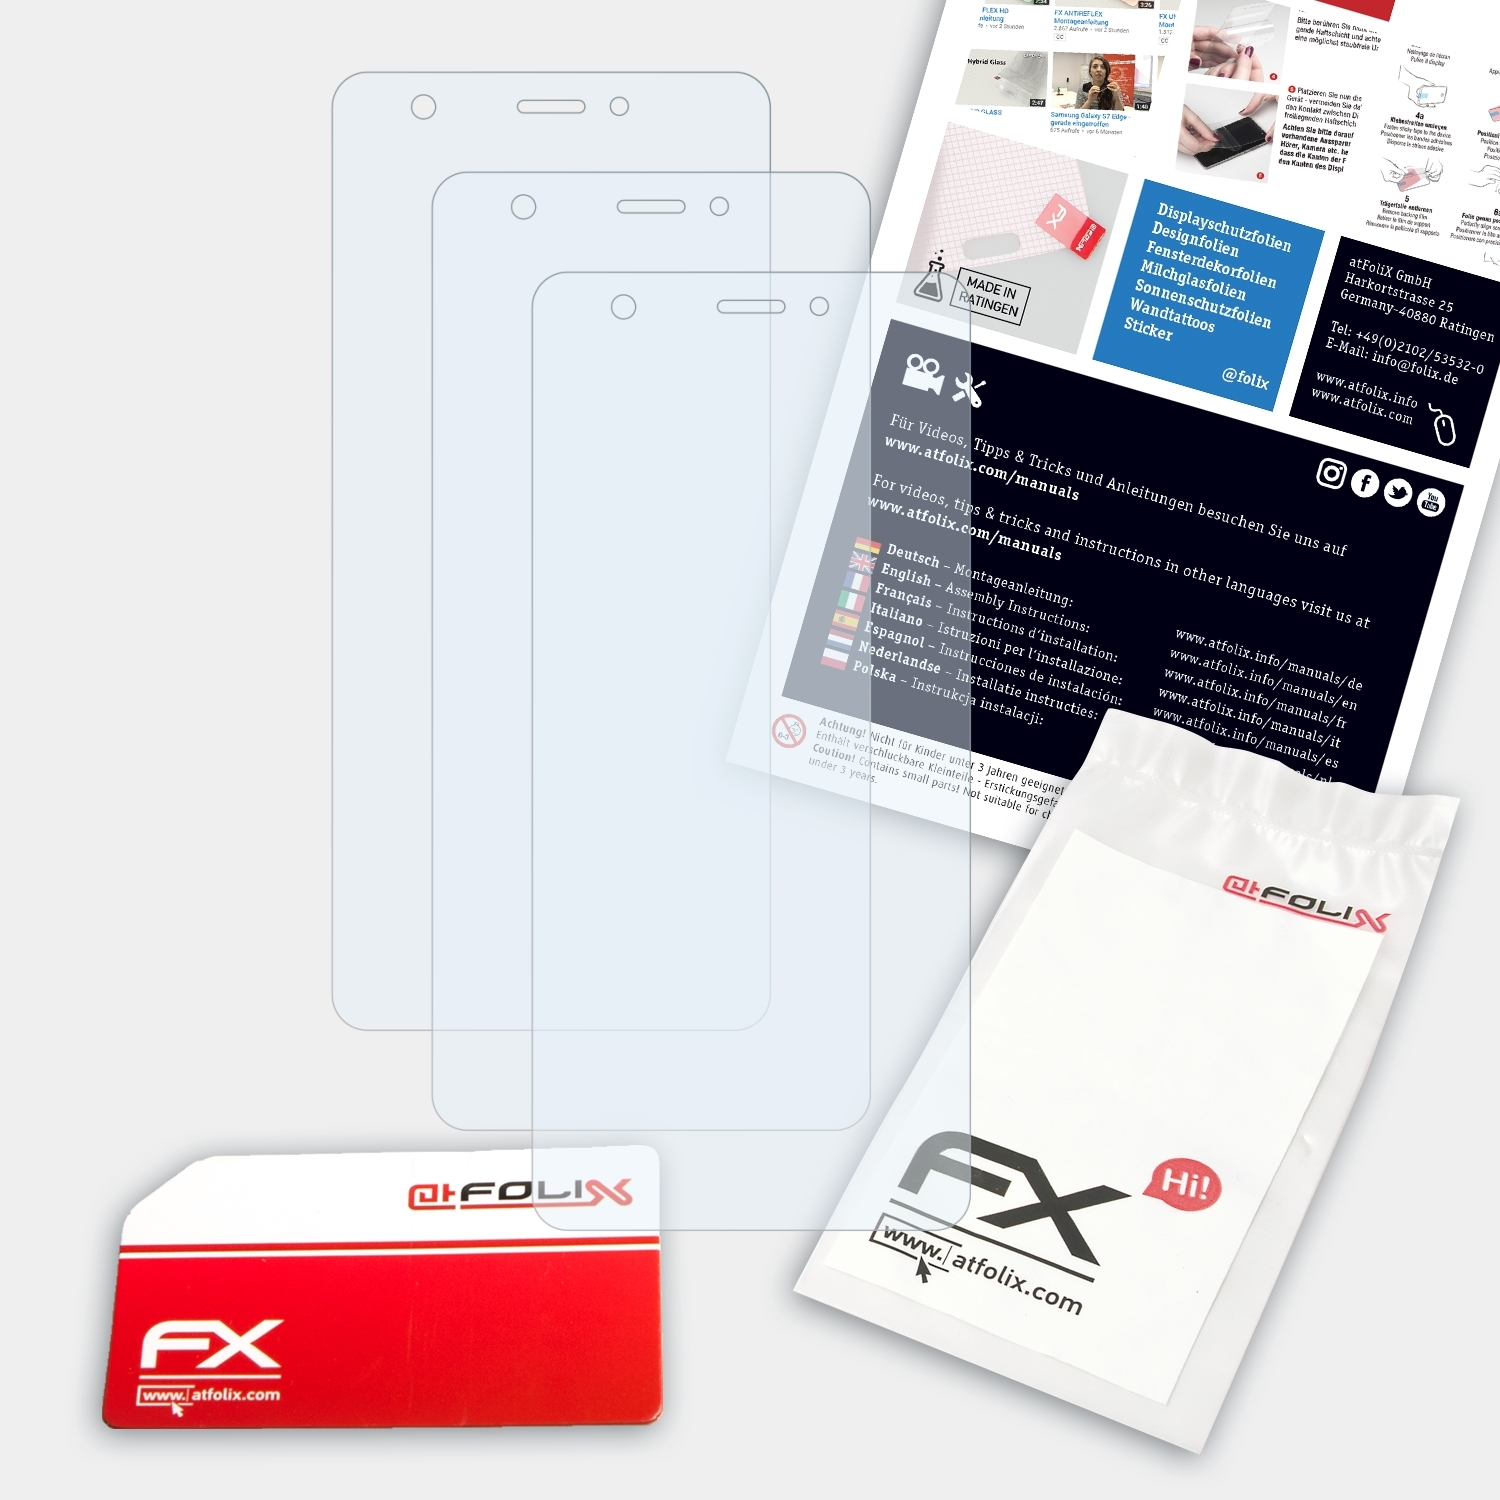 ATFOLIX 3x FX-Clear Displayschutz(für Huawei Nova)